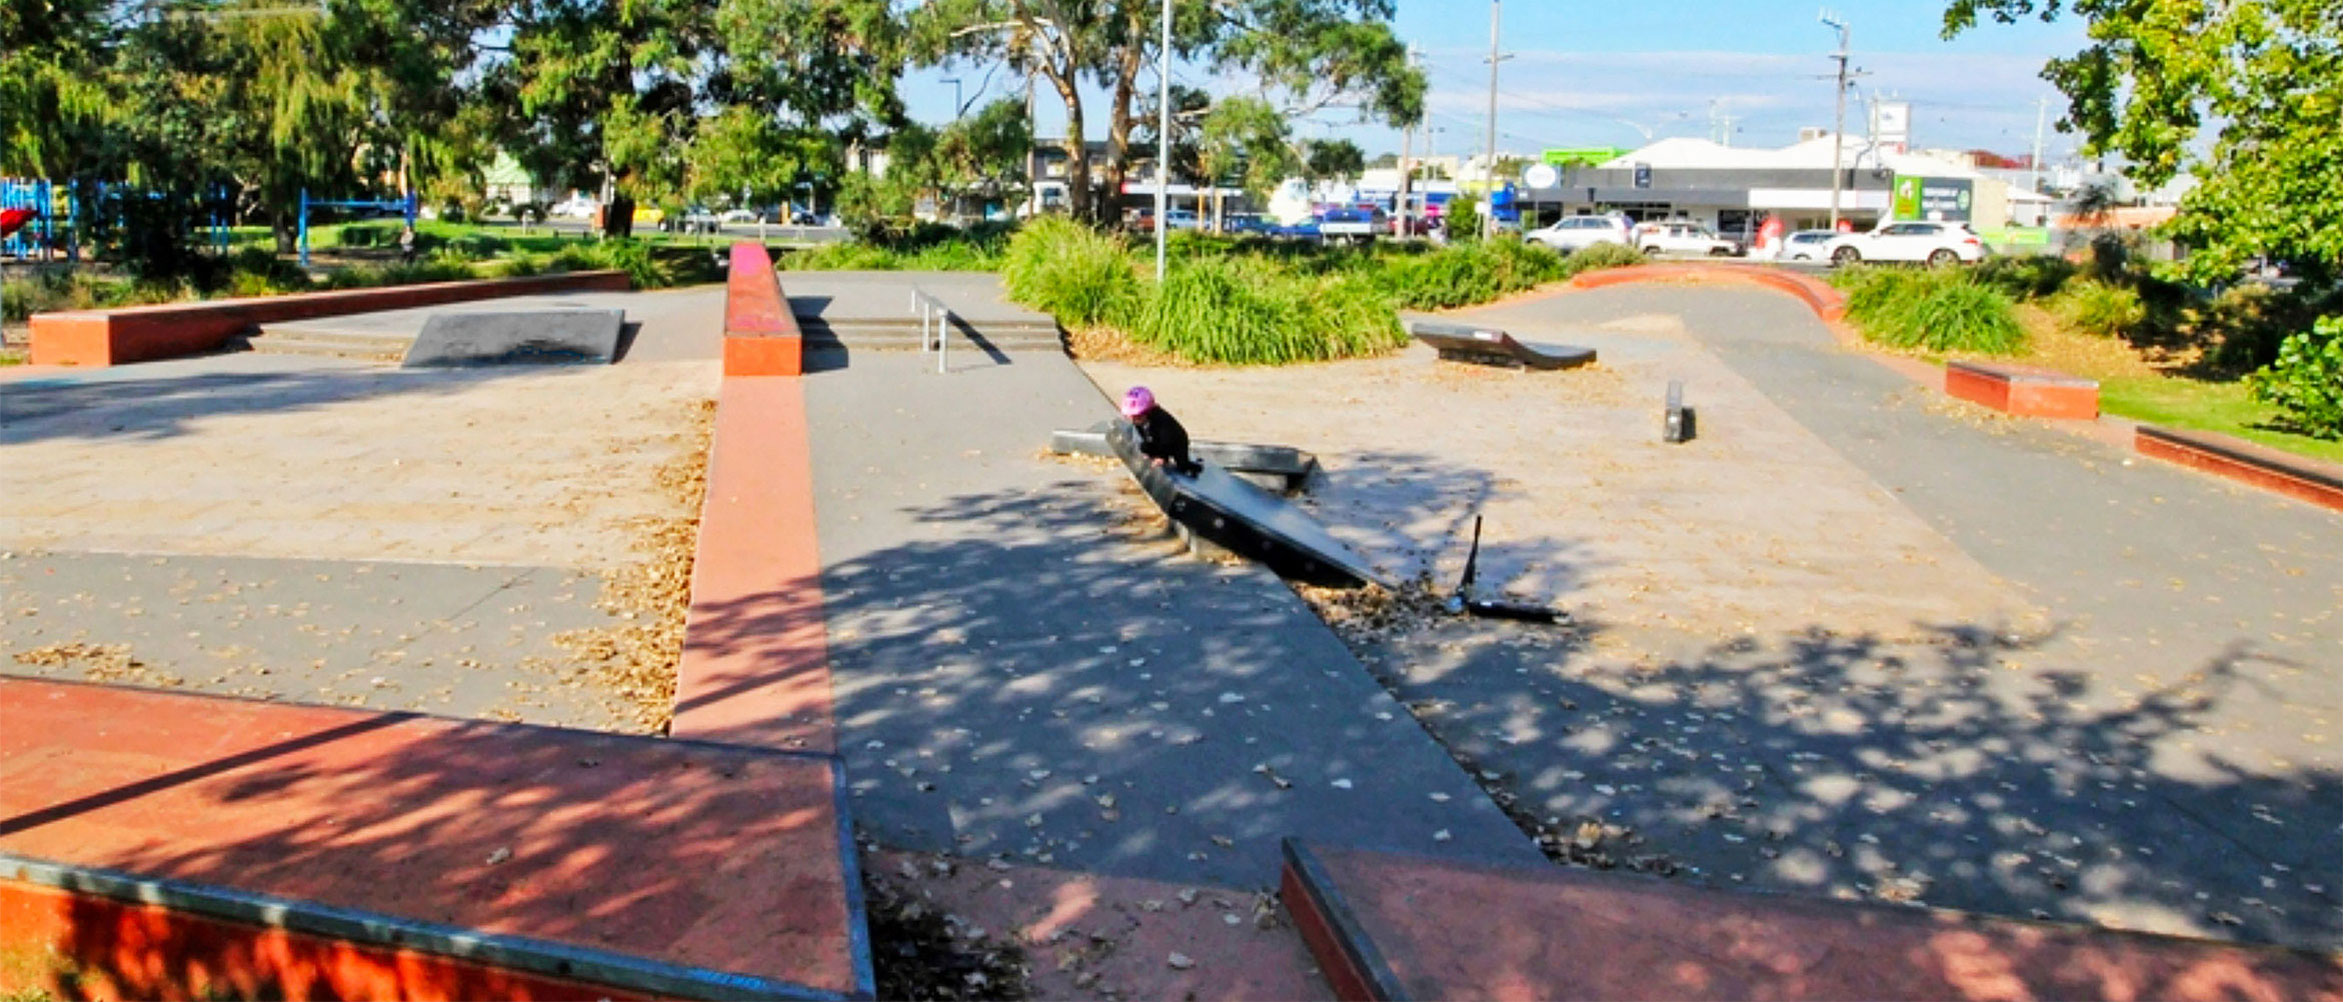 Rosebud skate plaza mornington peninsula, Concrete Skateparks